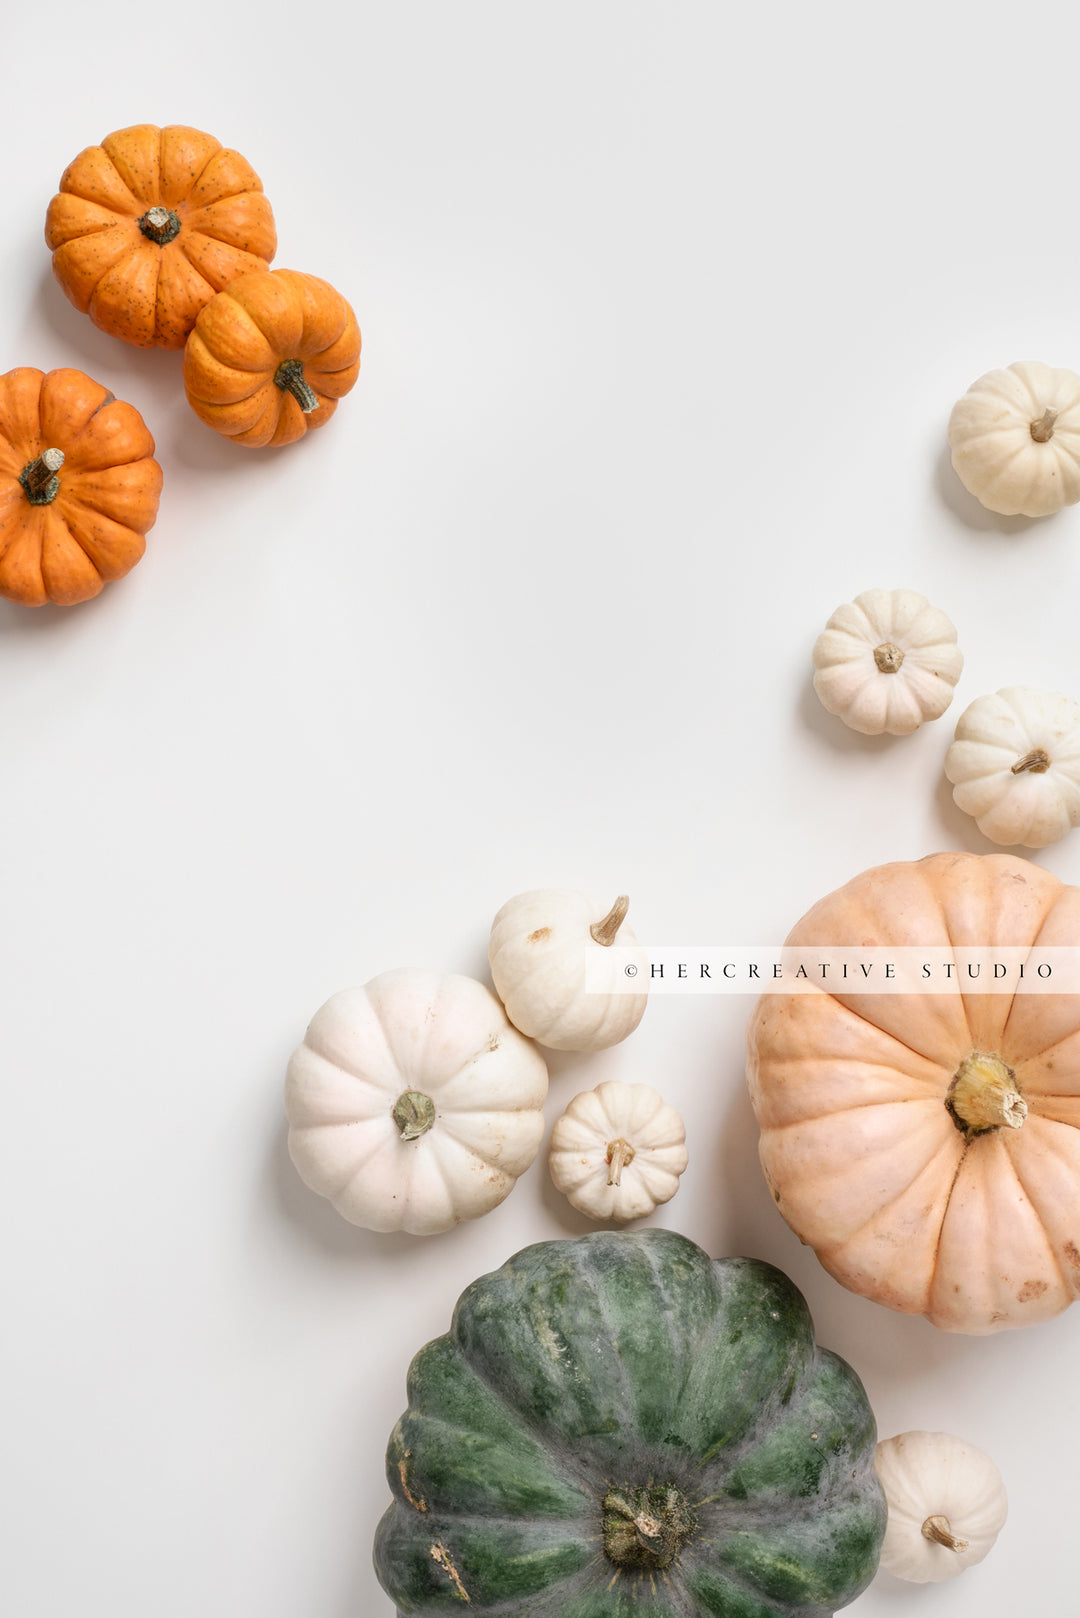 Pumpkins on White Background 4. Digital Stock Image.